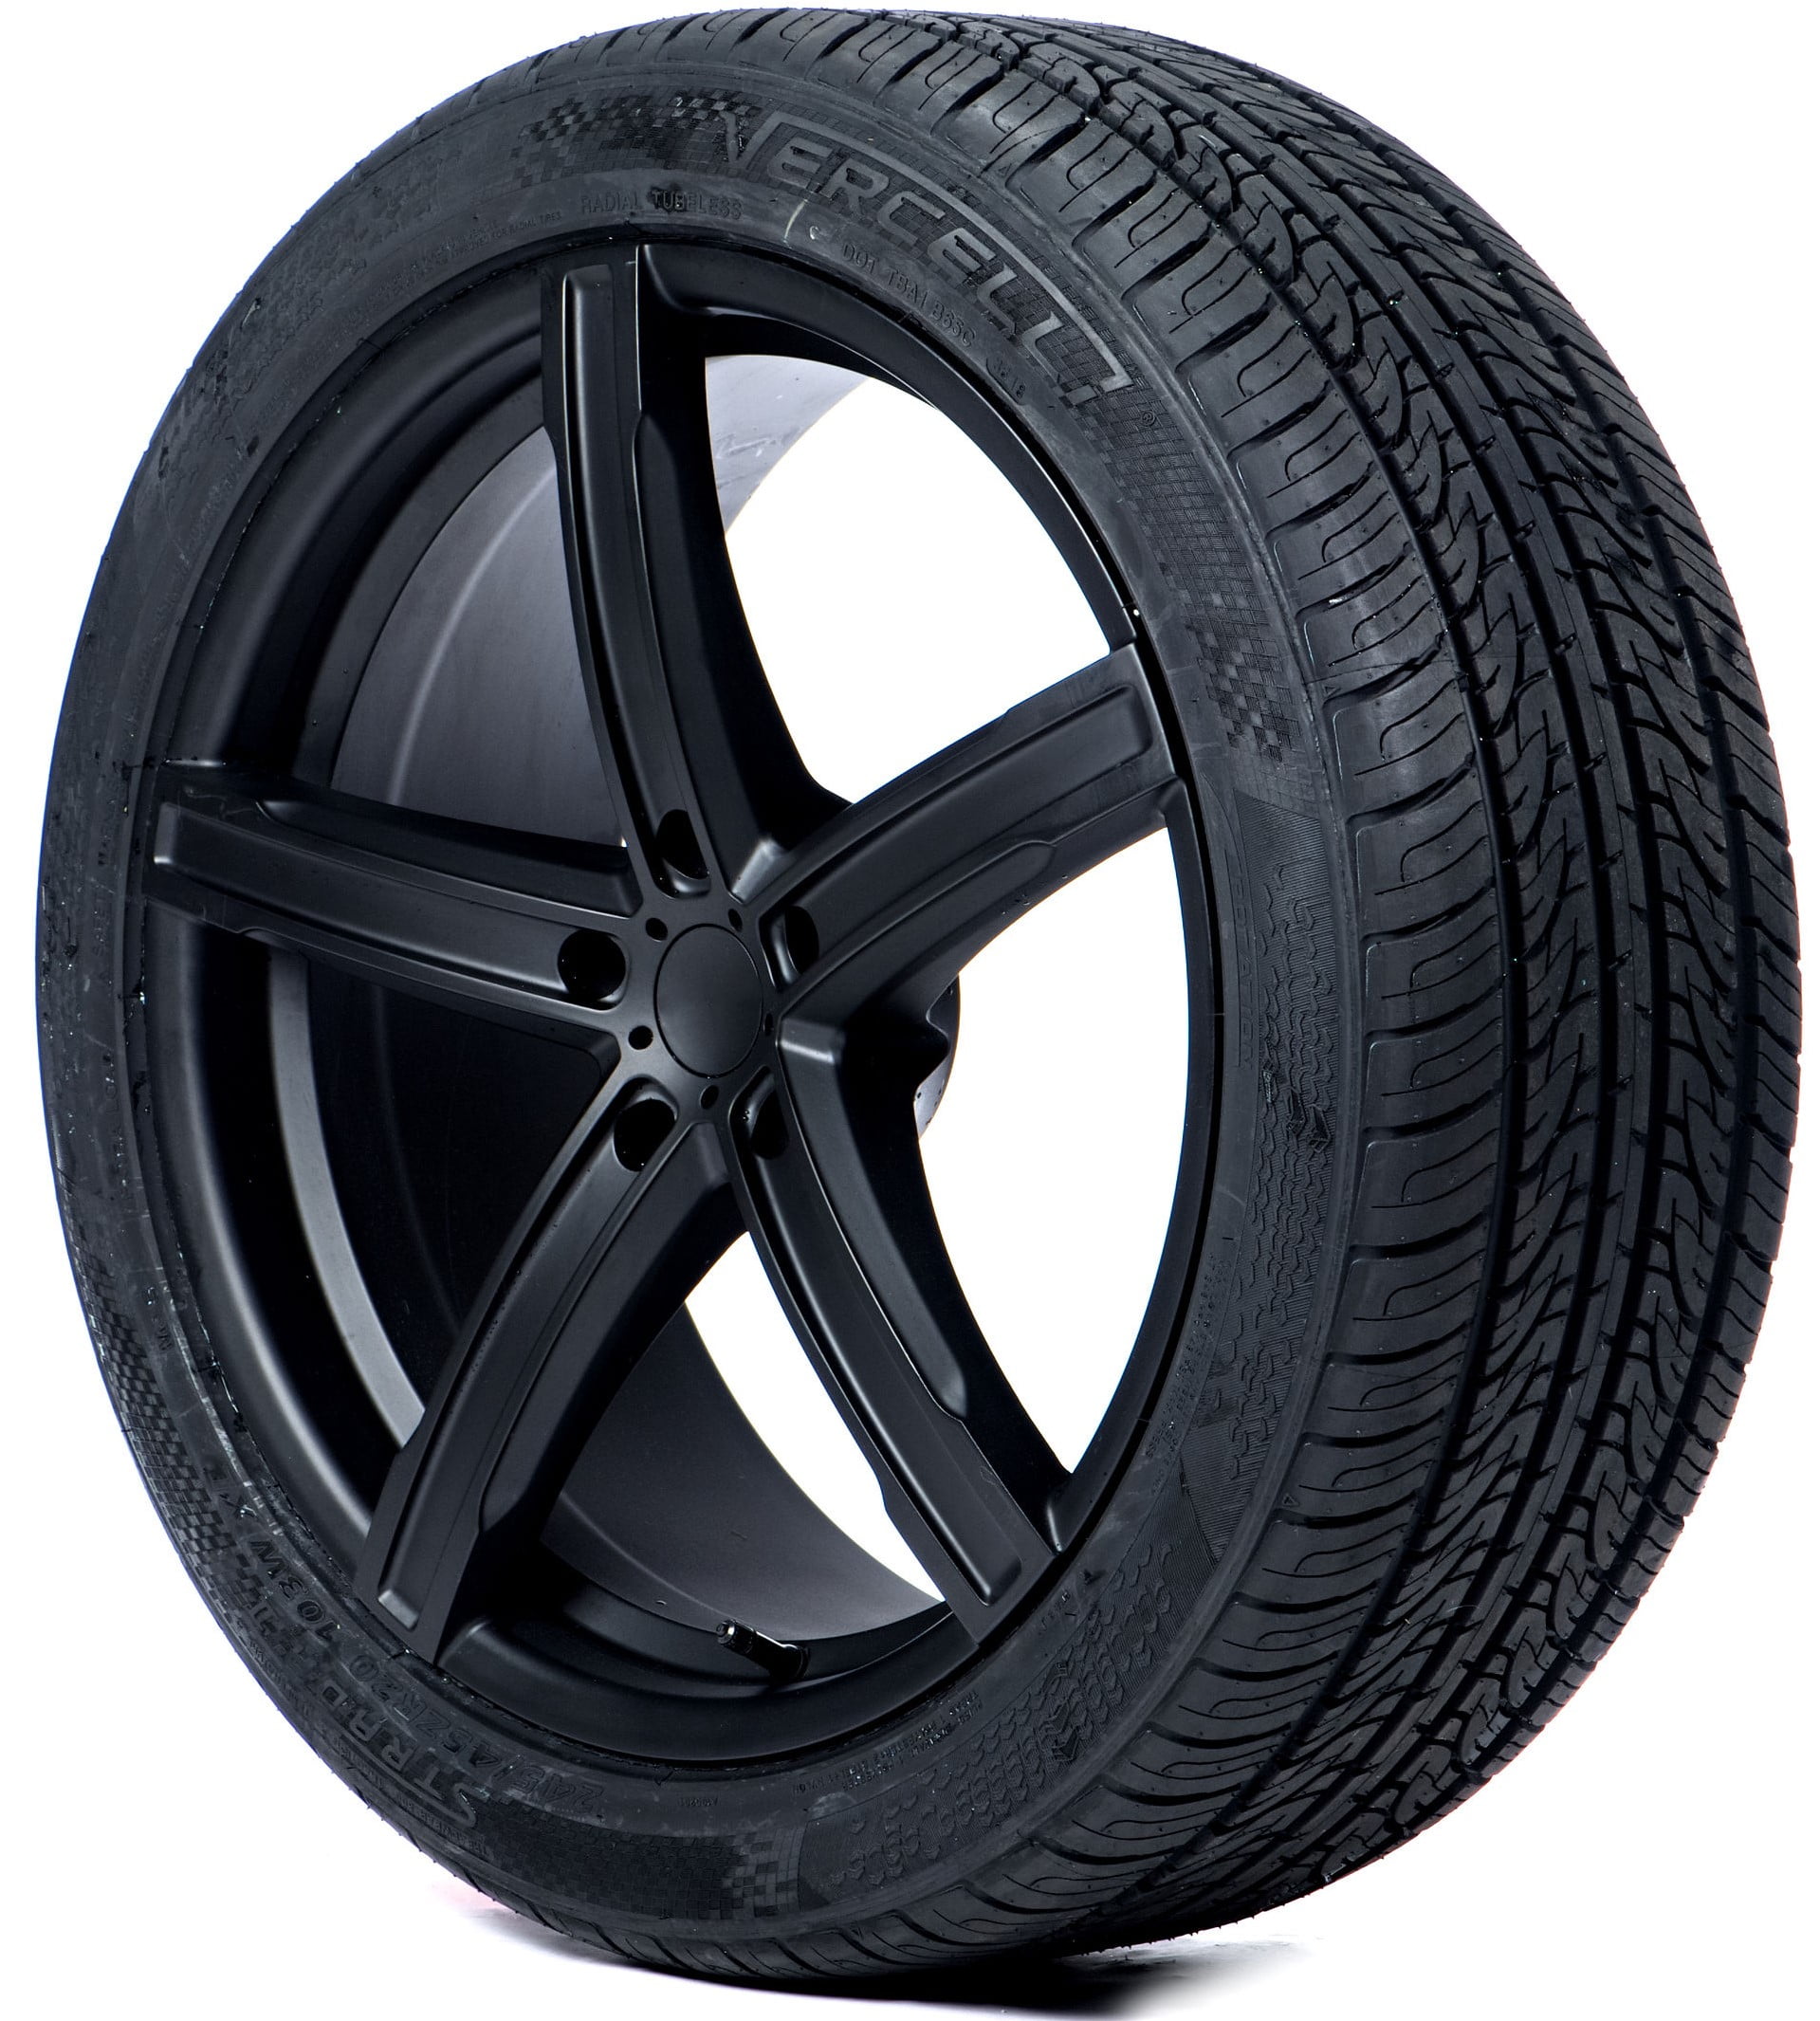 Vercelli Strada 2 All-Season Tire - 235/50R17 100W